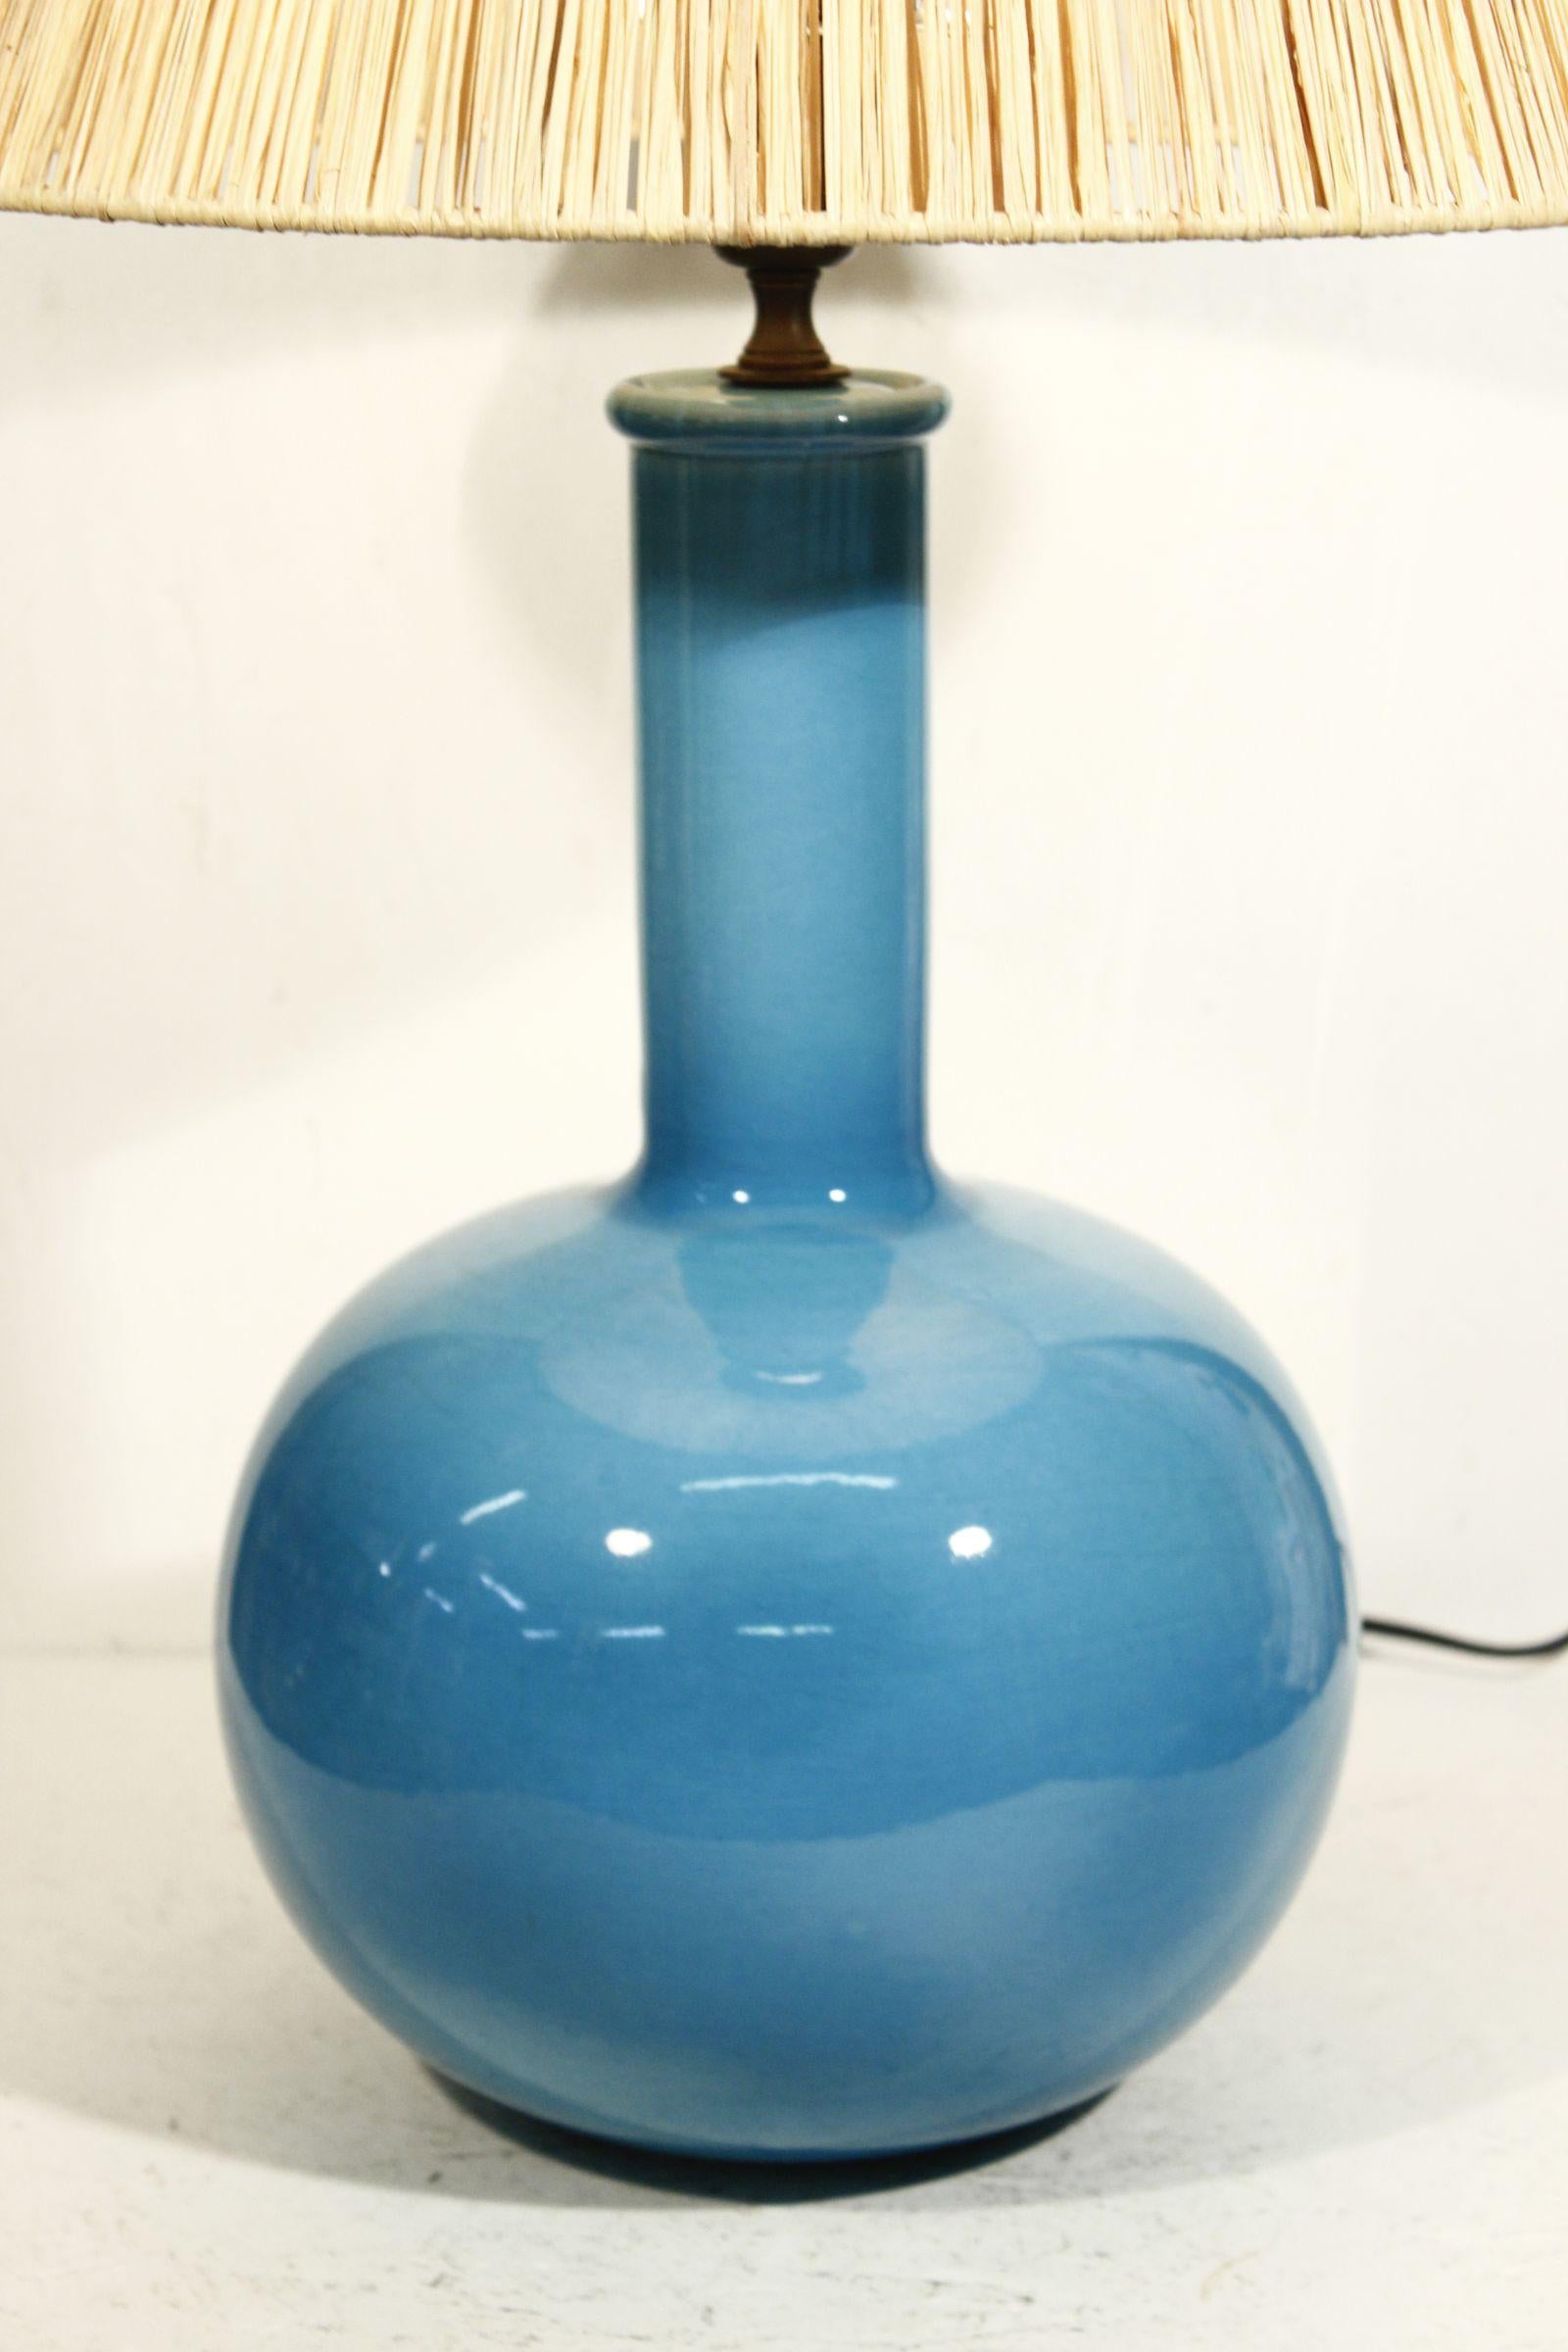 Cerulean blue crackle glaze ceramic lamp base by Alvino Bagni, Italy 1960s For Sale 4